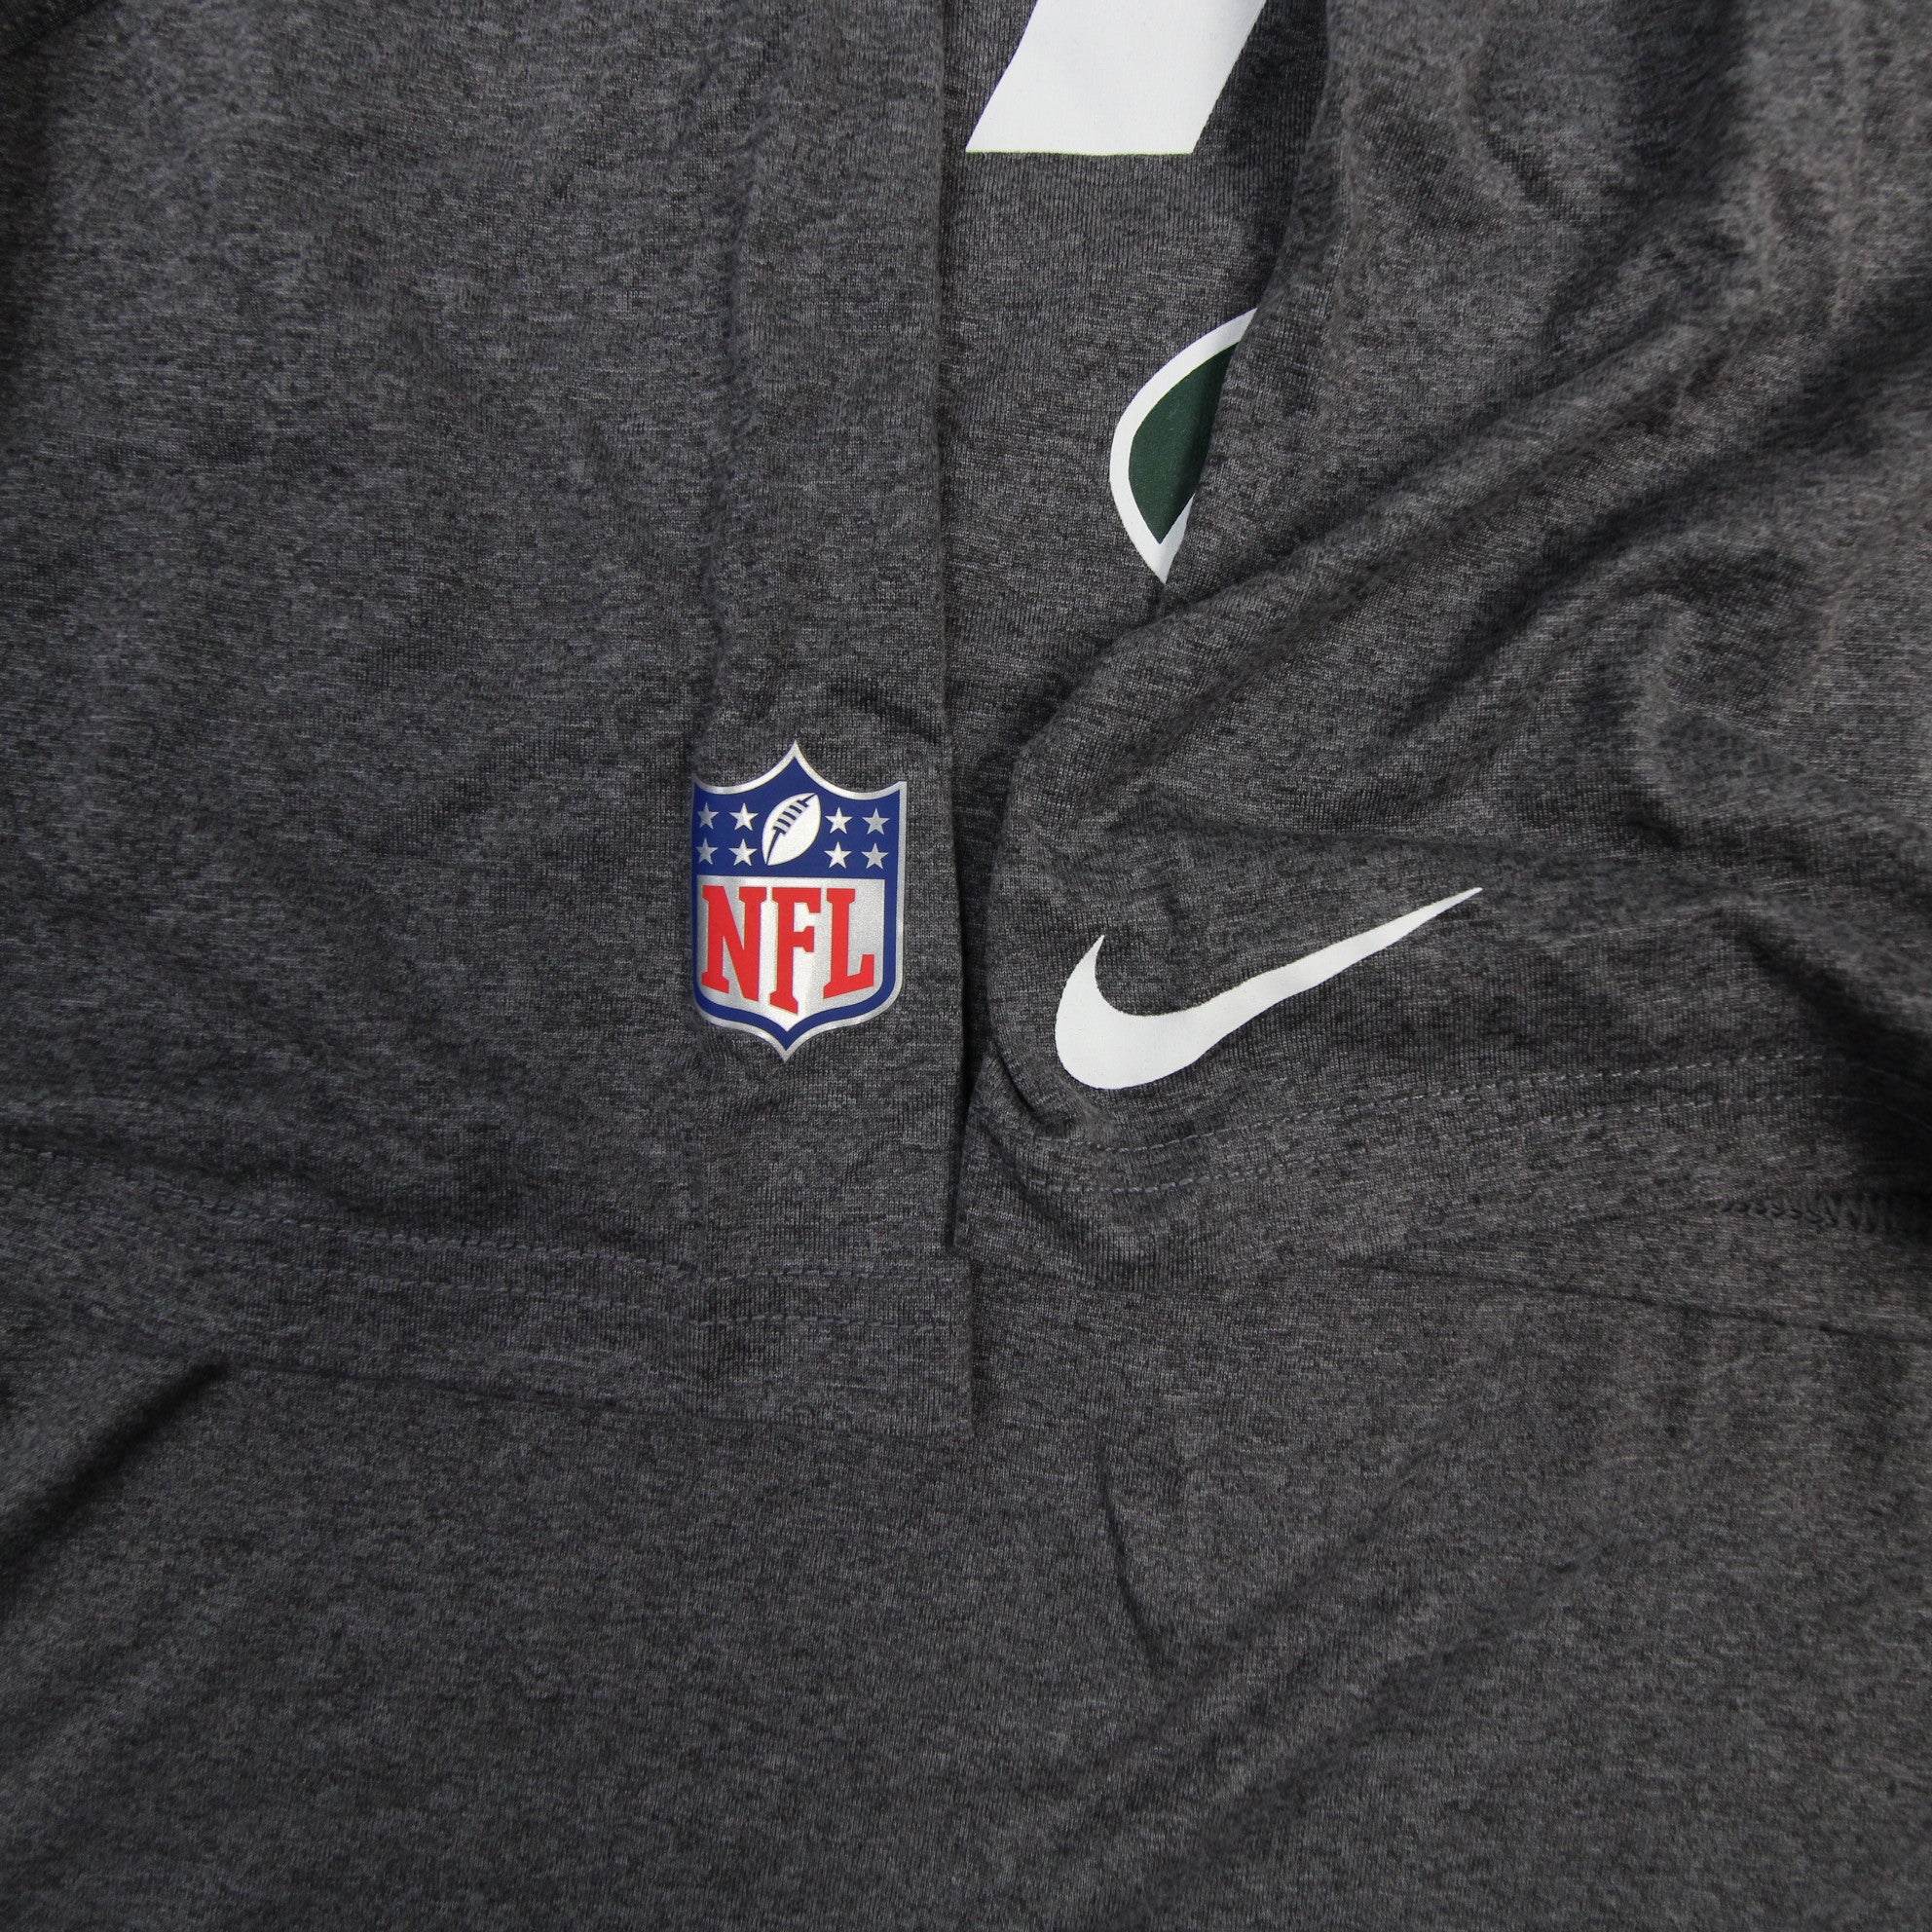 Green Nike NFL New York Jets Wilson #2 Jersey